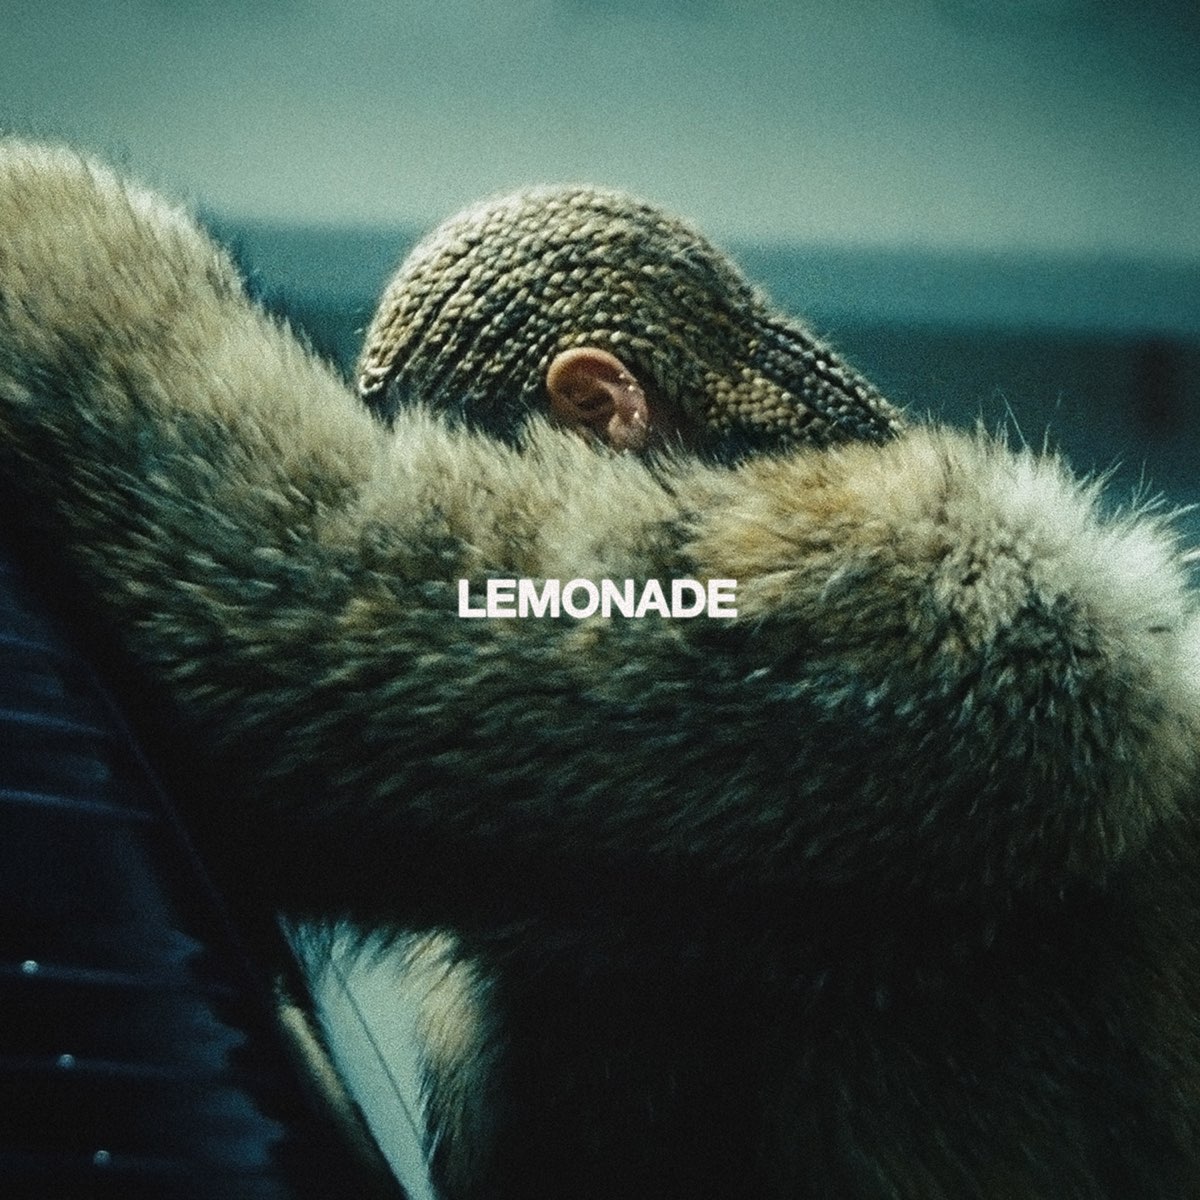 Lemonade - Album by Beyoncé - Apple Music